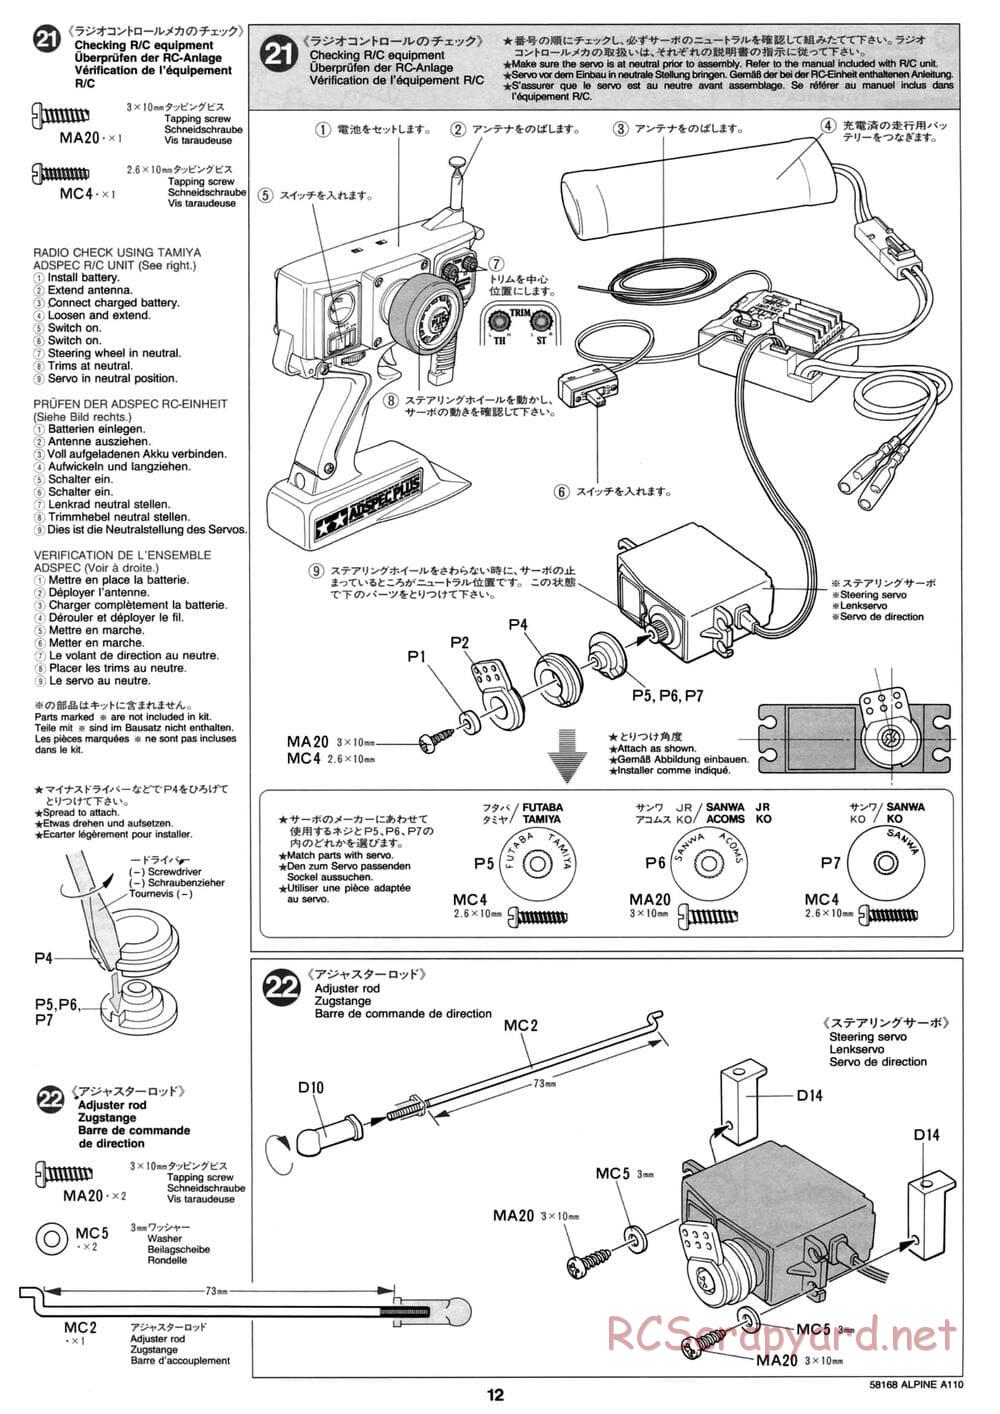 Tamiya - Alpine A110 - M02 Chassis - Manual - Page 12